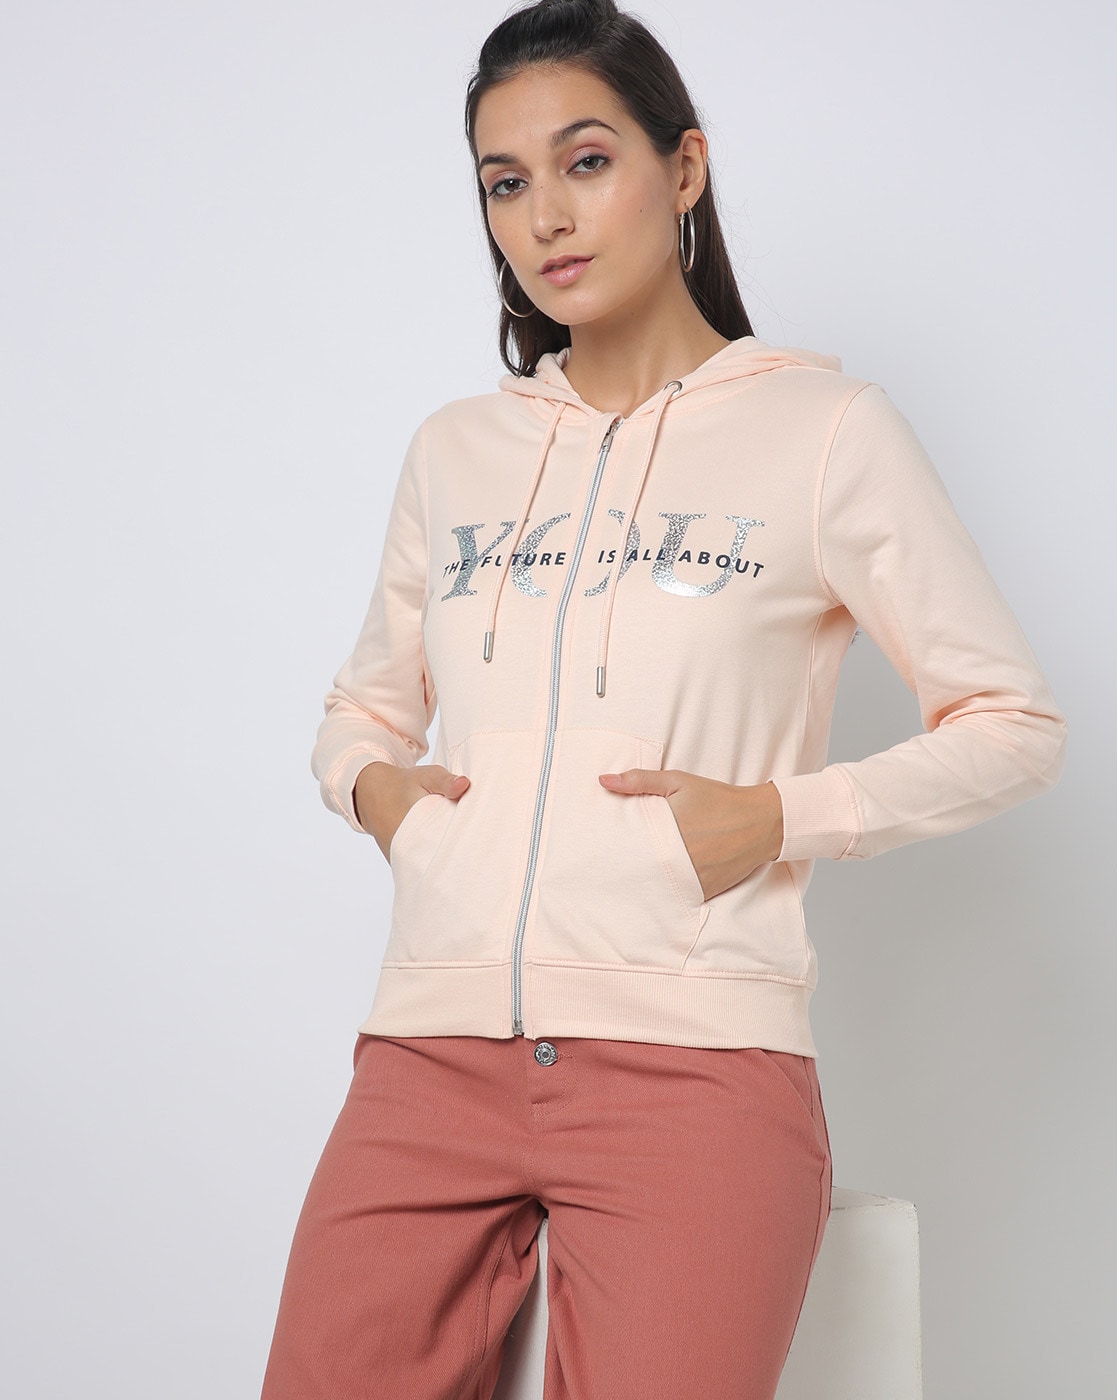 Hollister Hoodie Womens Extra Small Long Sleeve Sweatshirt Kangaroo Pockets  Logo